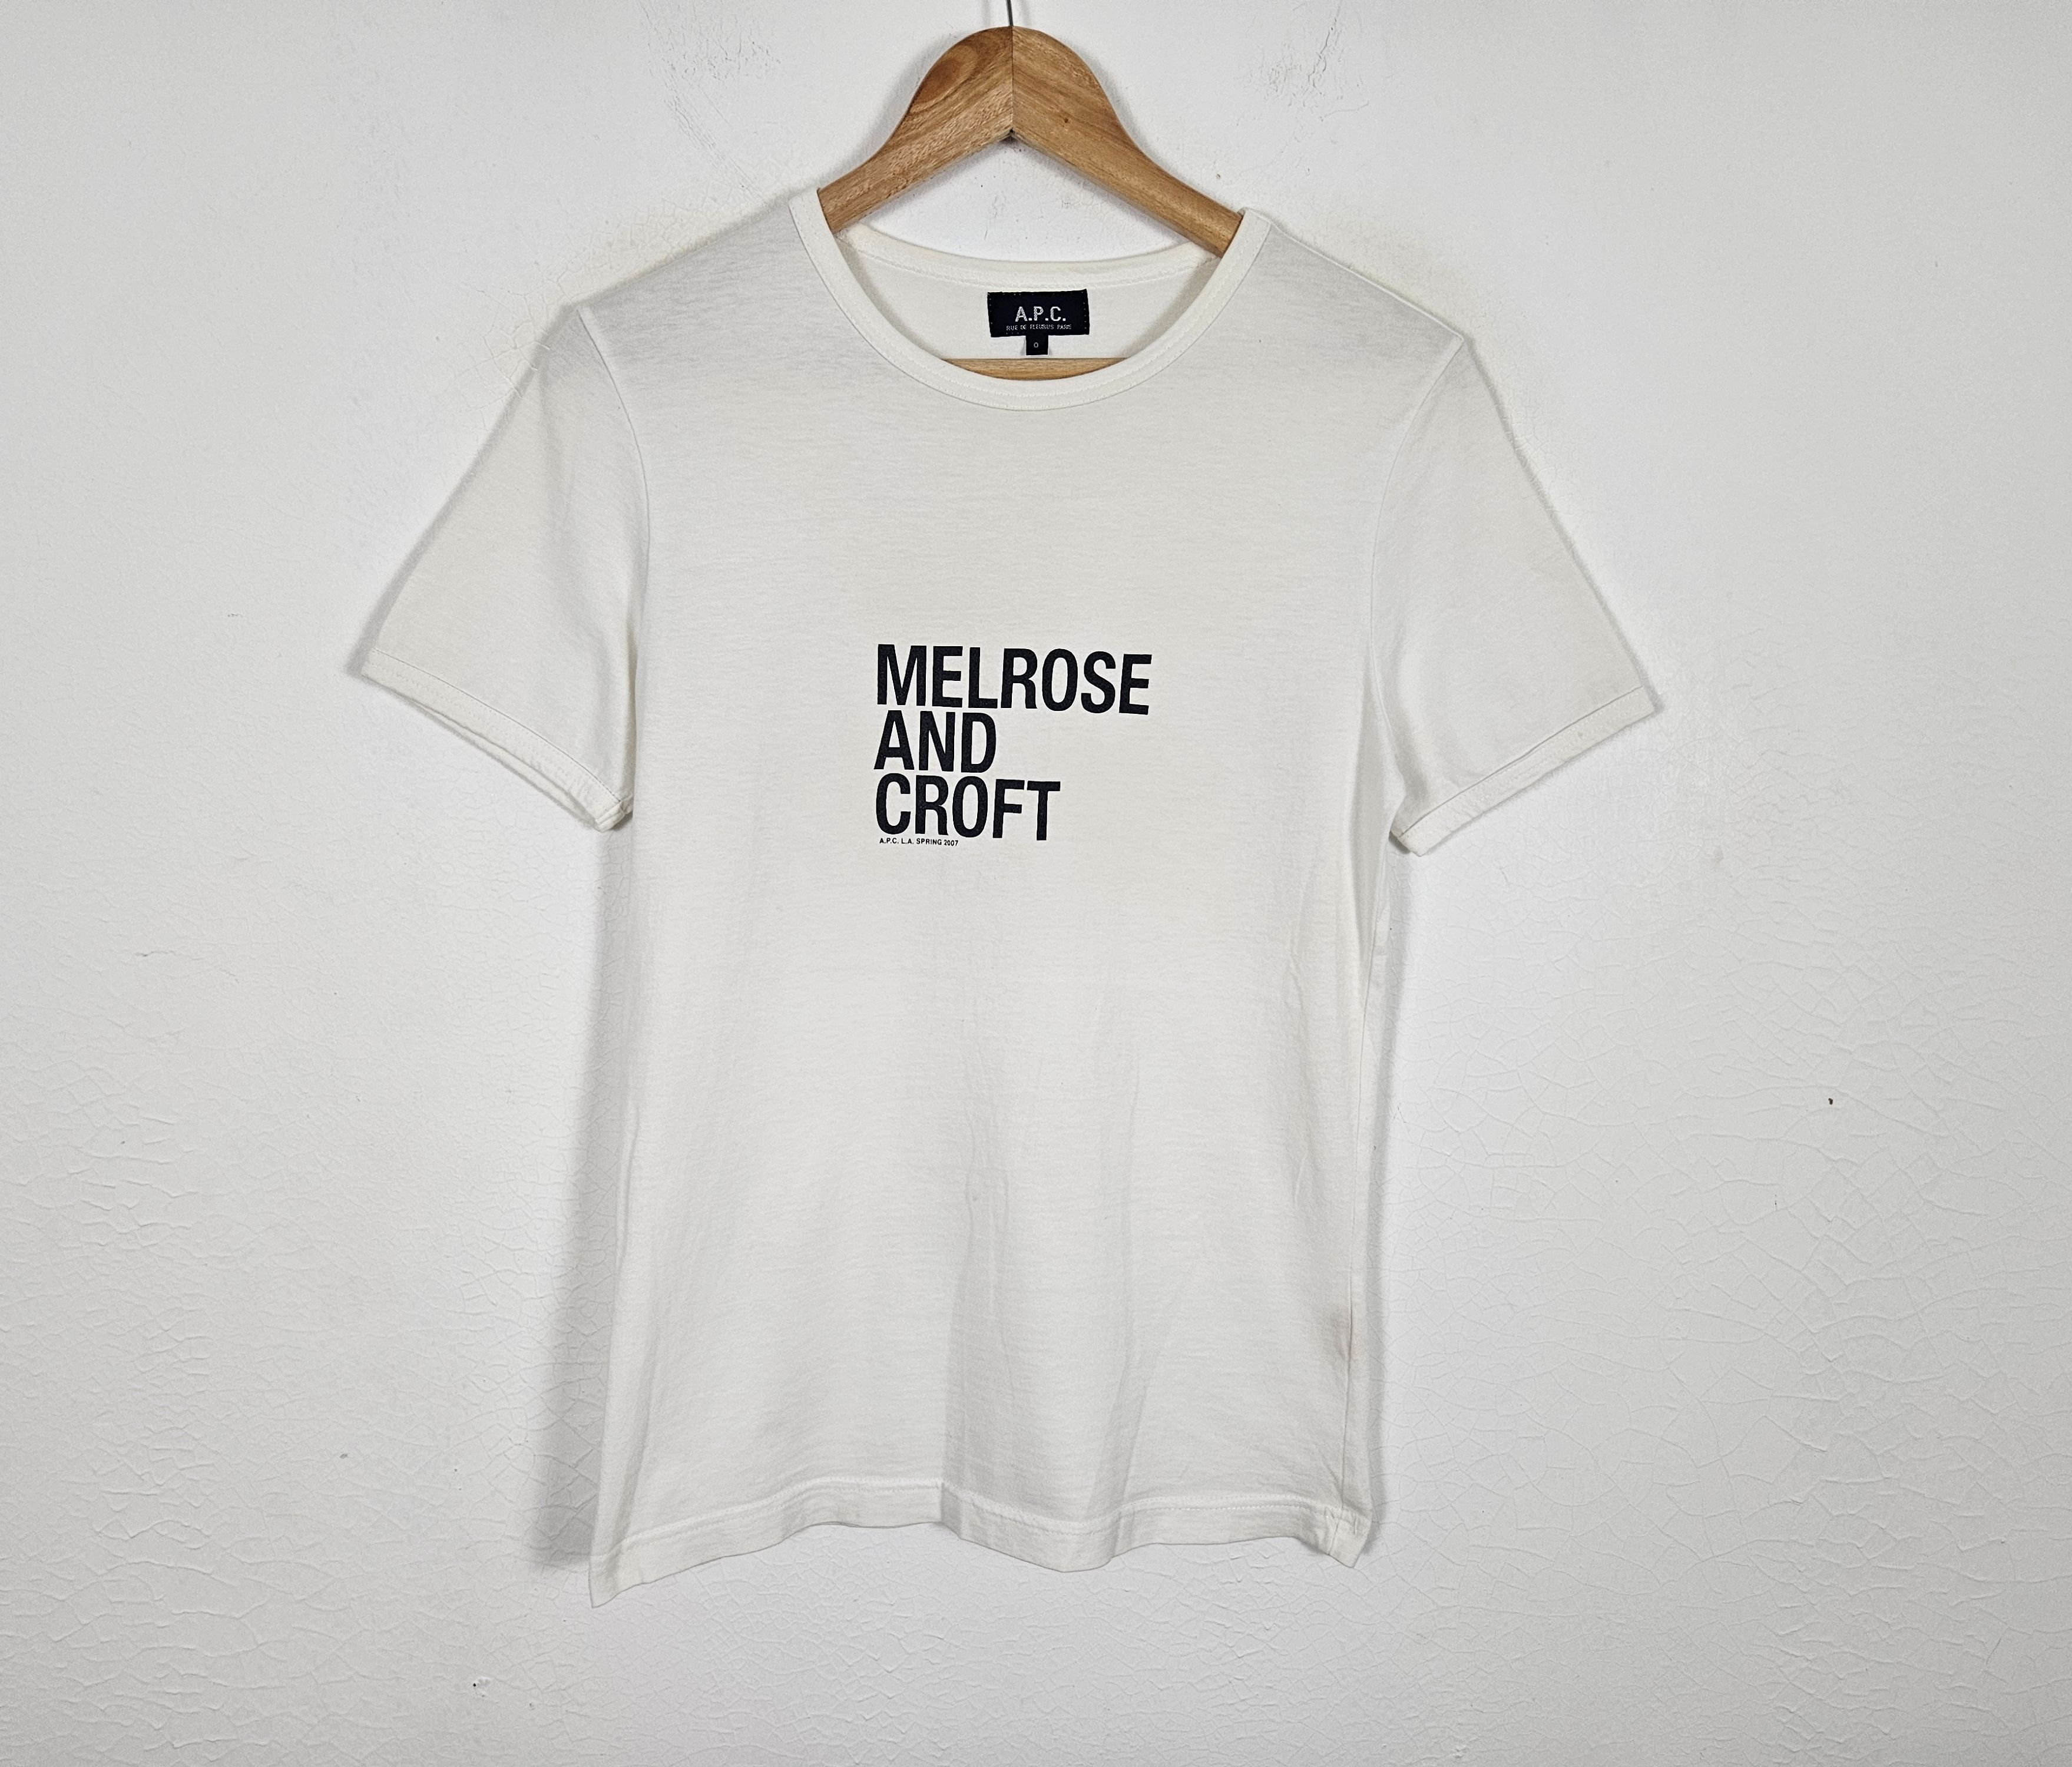 APC Melrose and Croft LA Spring 2007 shirt - 2